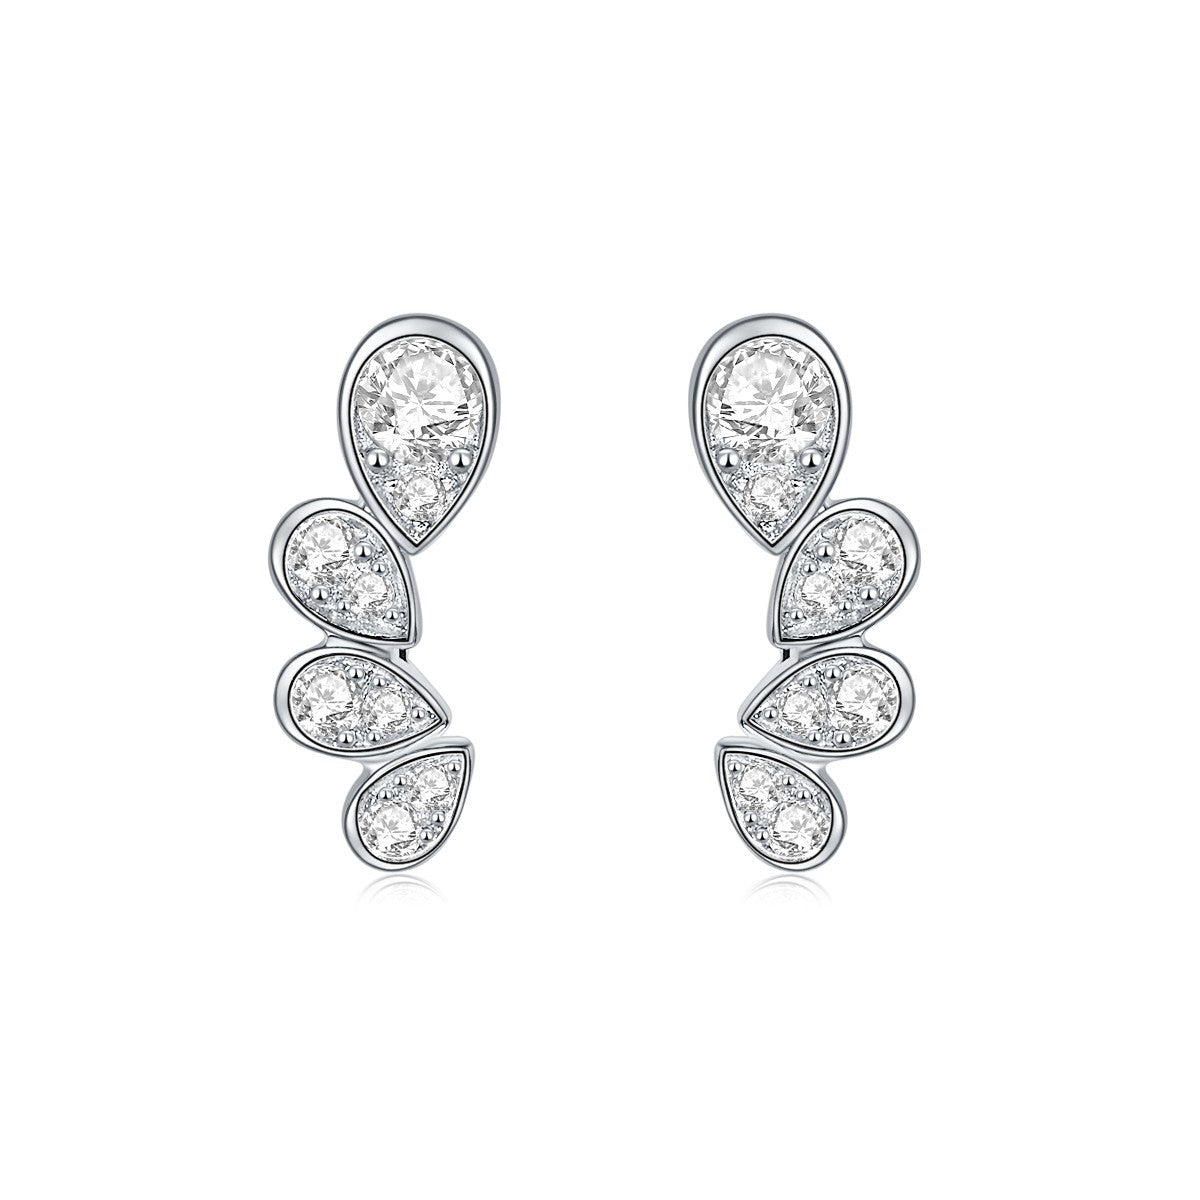 Josephine panelled pear-shaped earrings, full of diamonds, moissanite, seconds over the diamonds, silver plated 18K white gold earrings